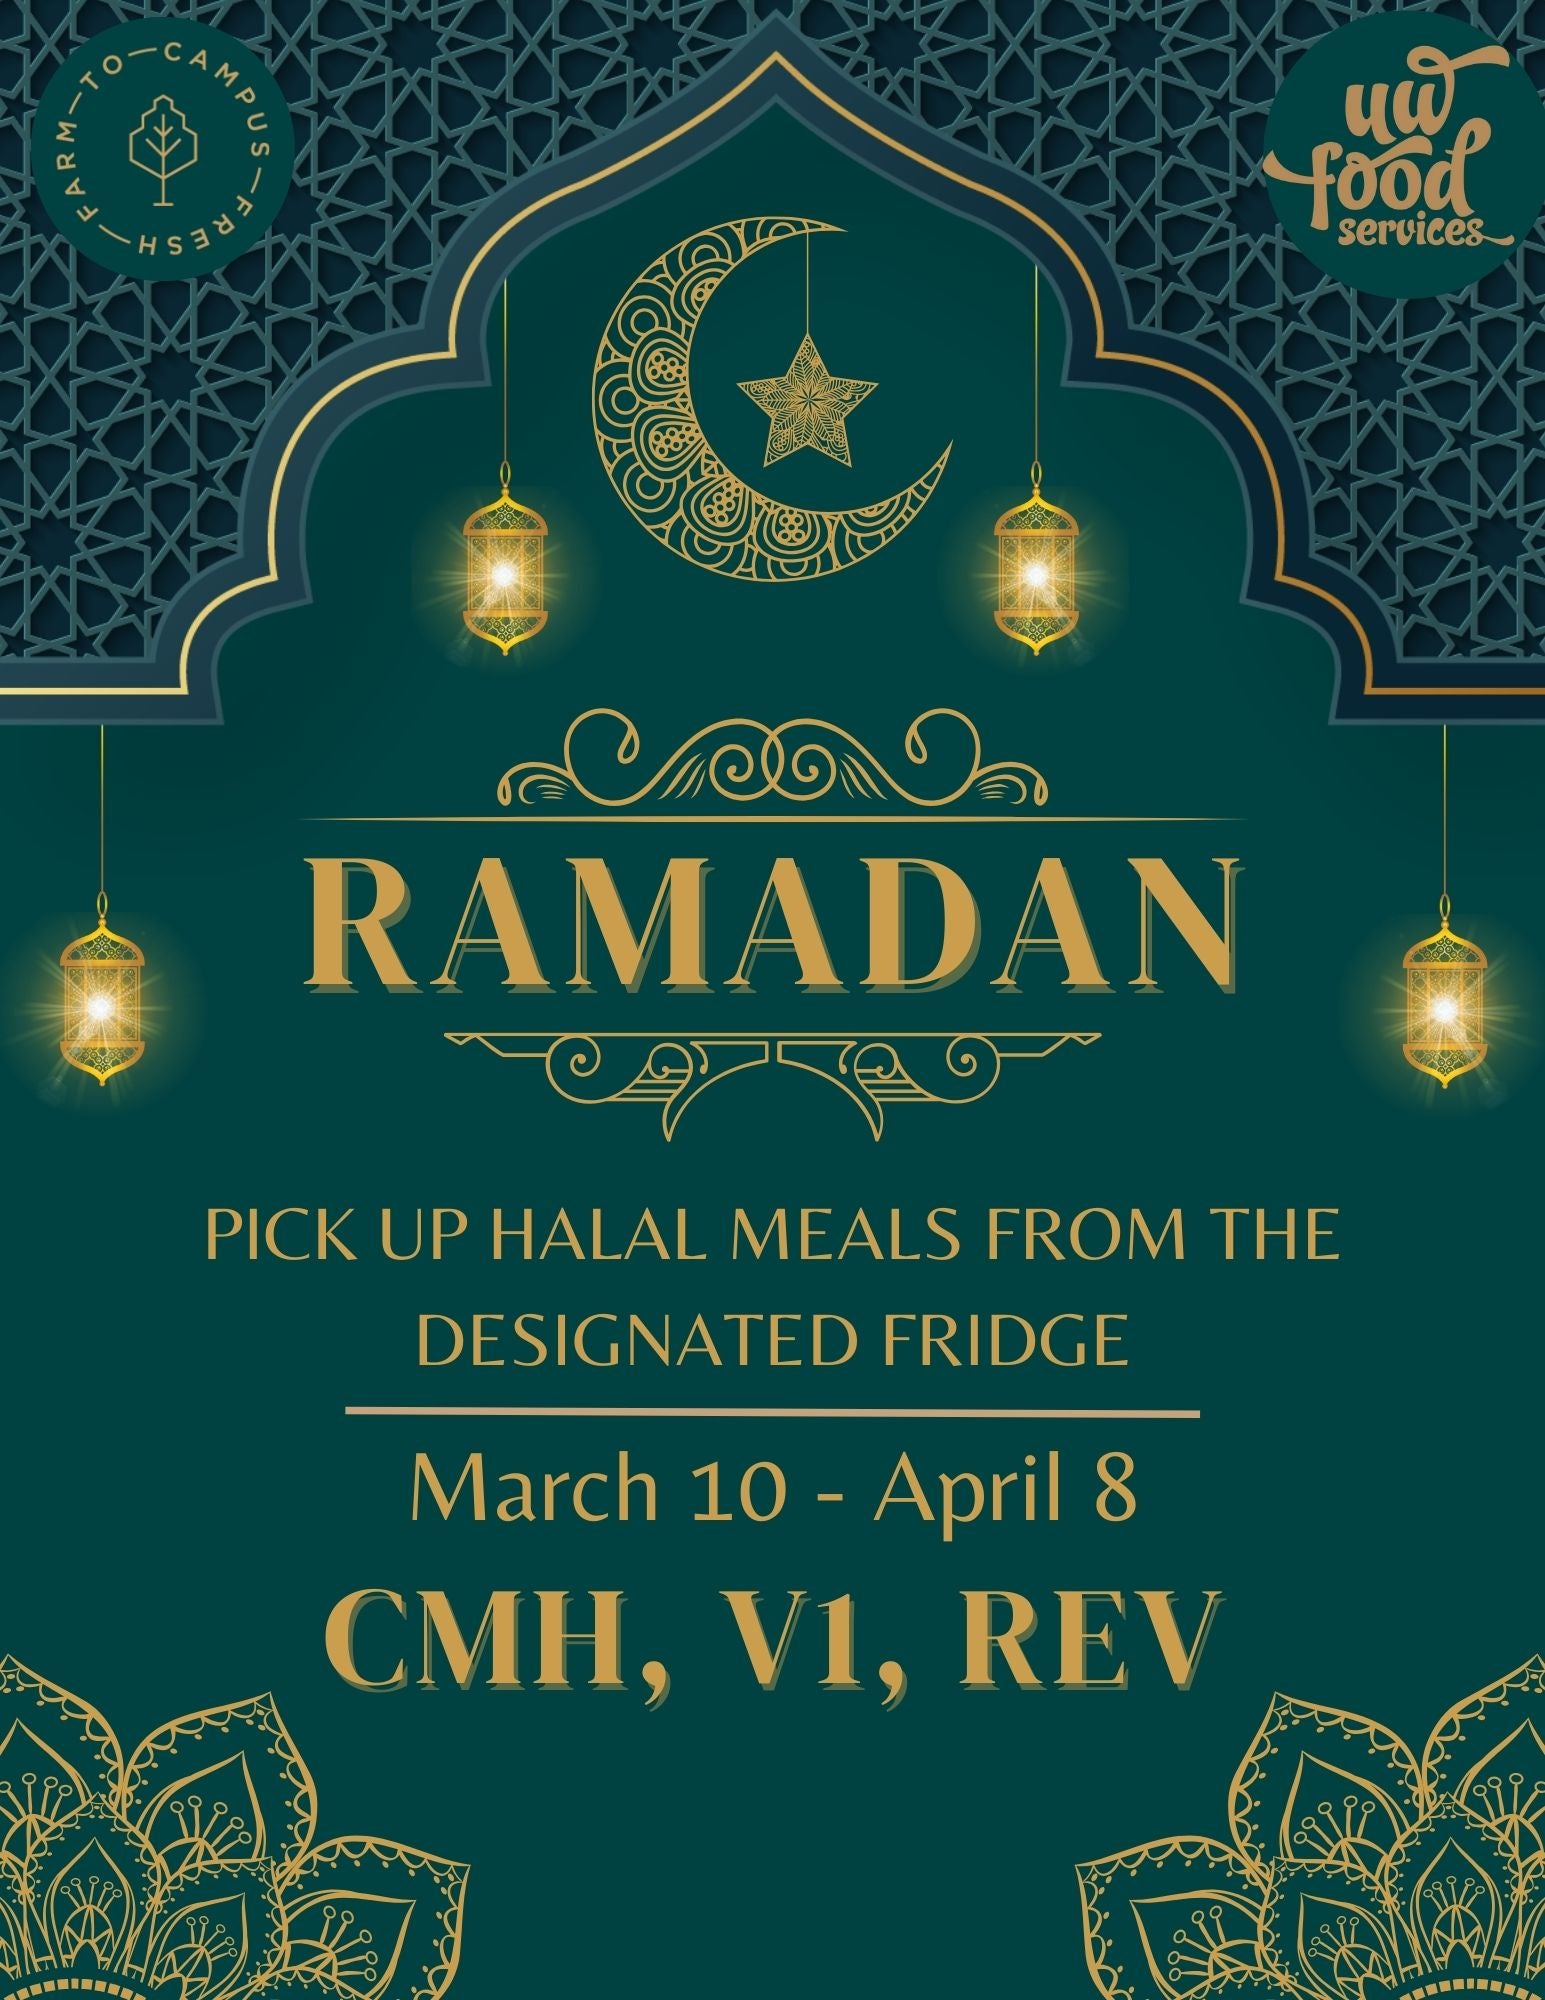 Ramandan pick up halal meals from designated fridge March 10- April8